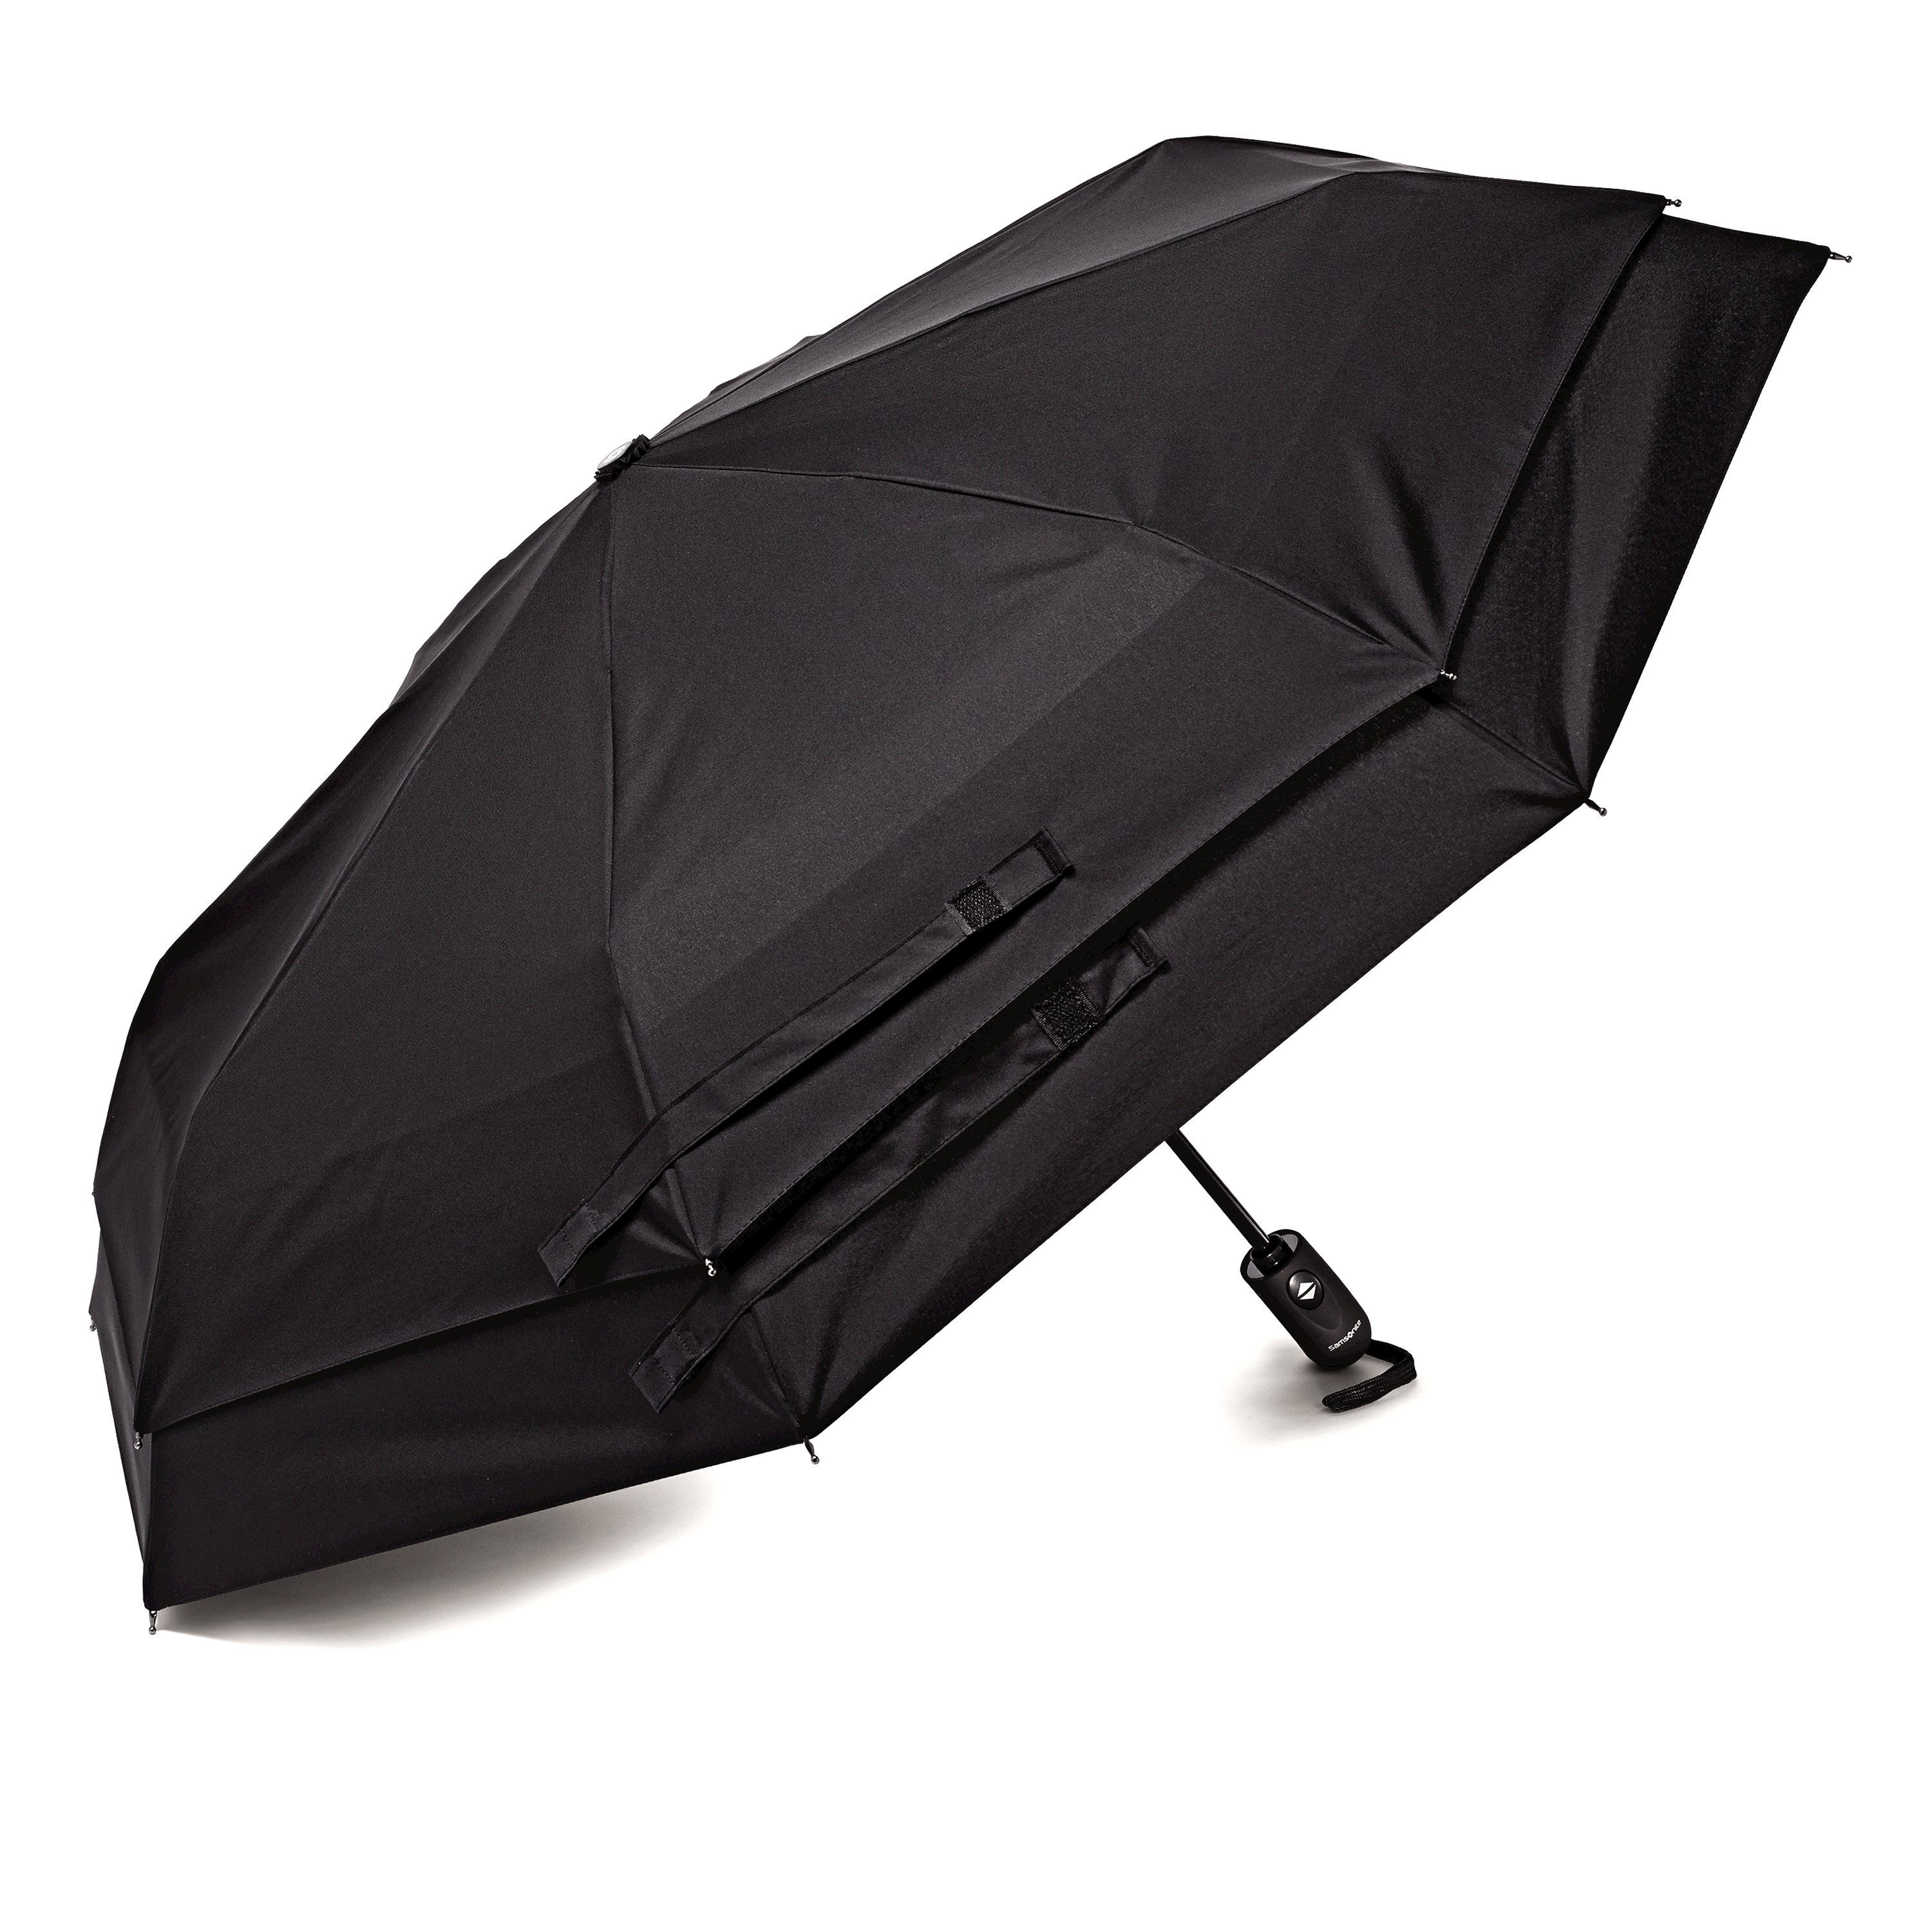 Windguard Auto Open/Close Umbrella in the color Black. image number 1